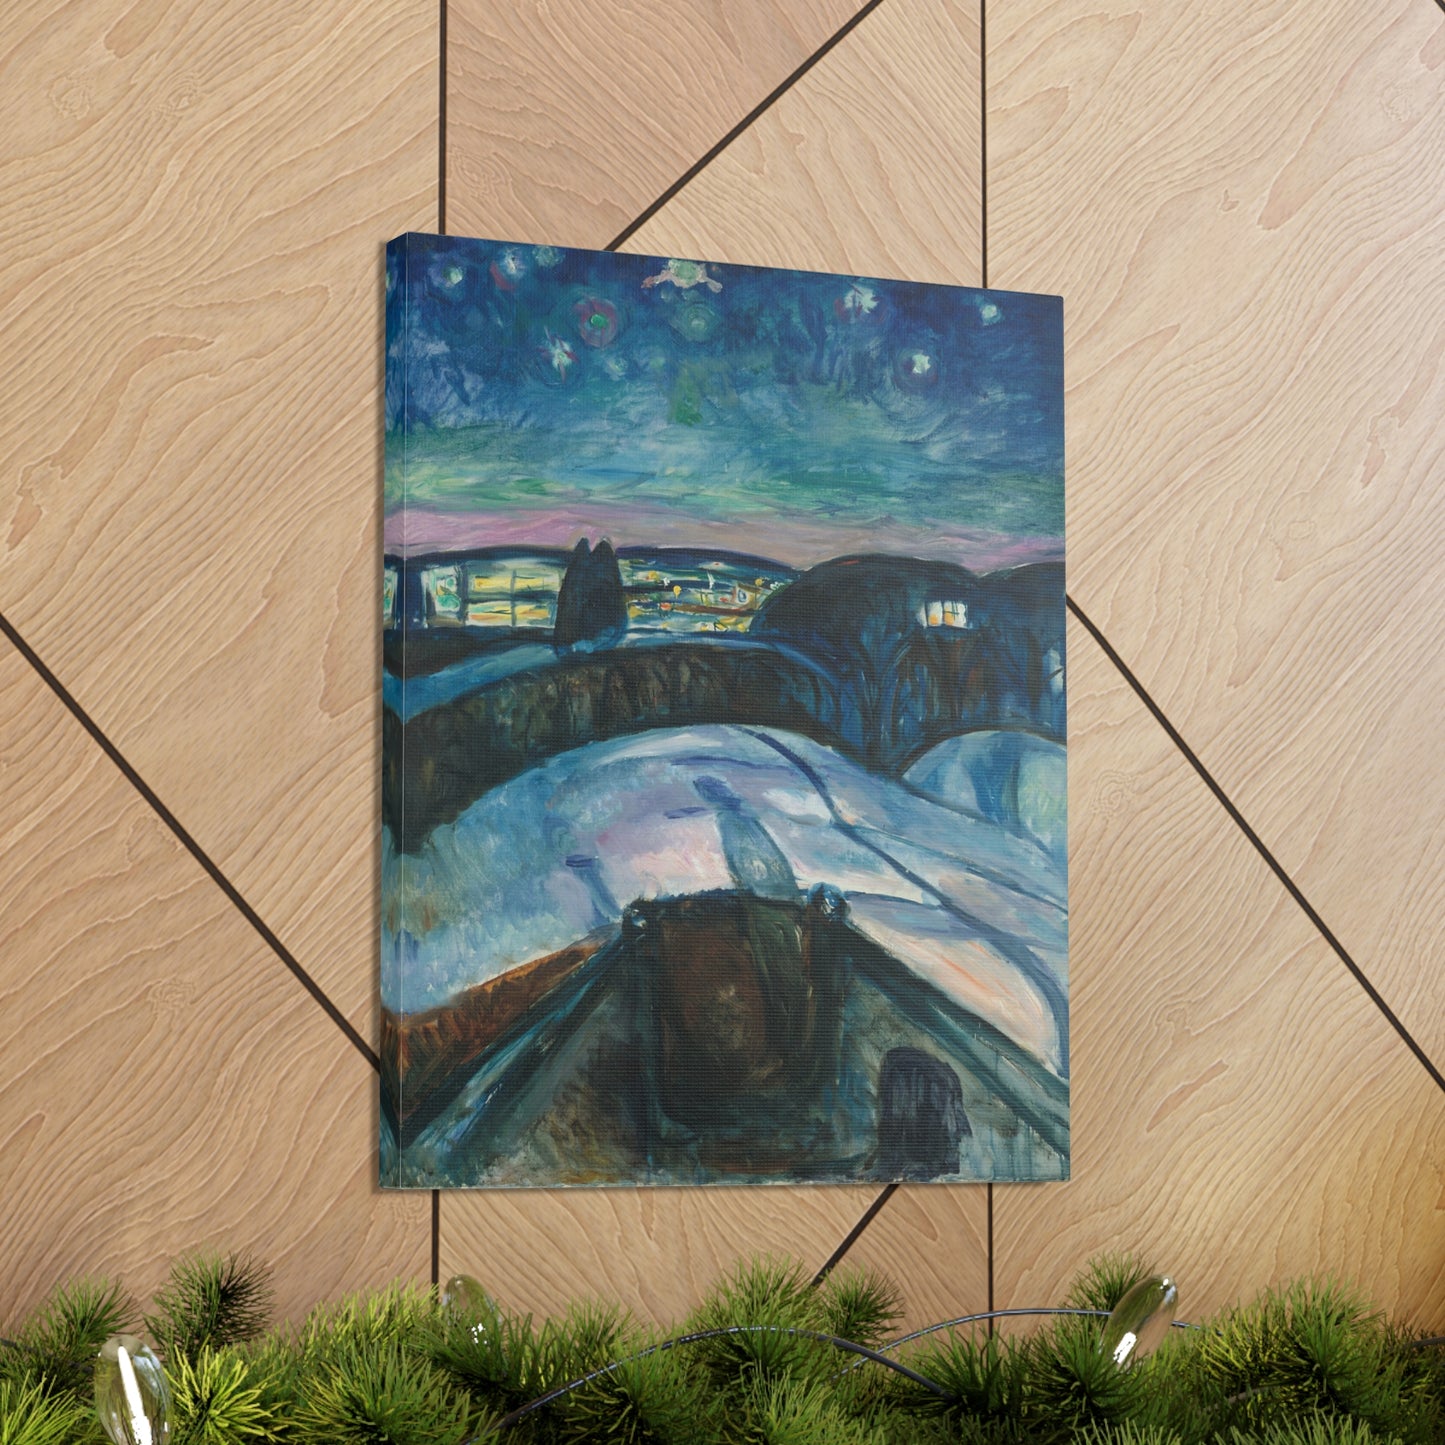 Starry Night by Edvard Munch - Canvas Print